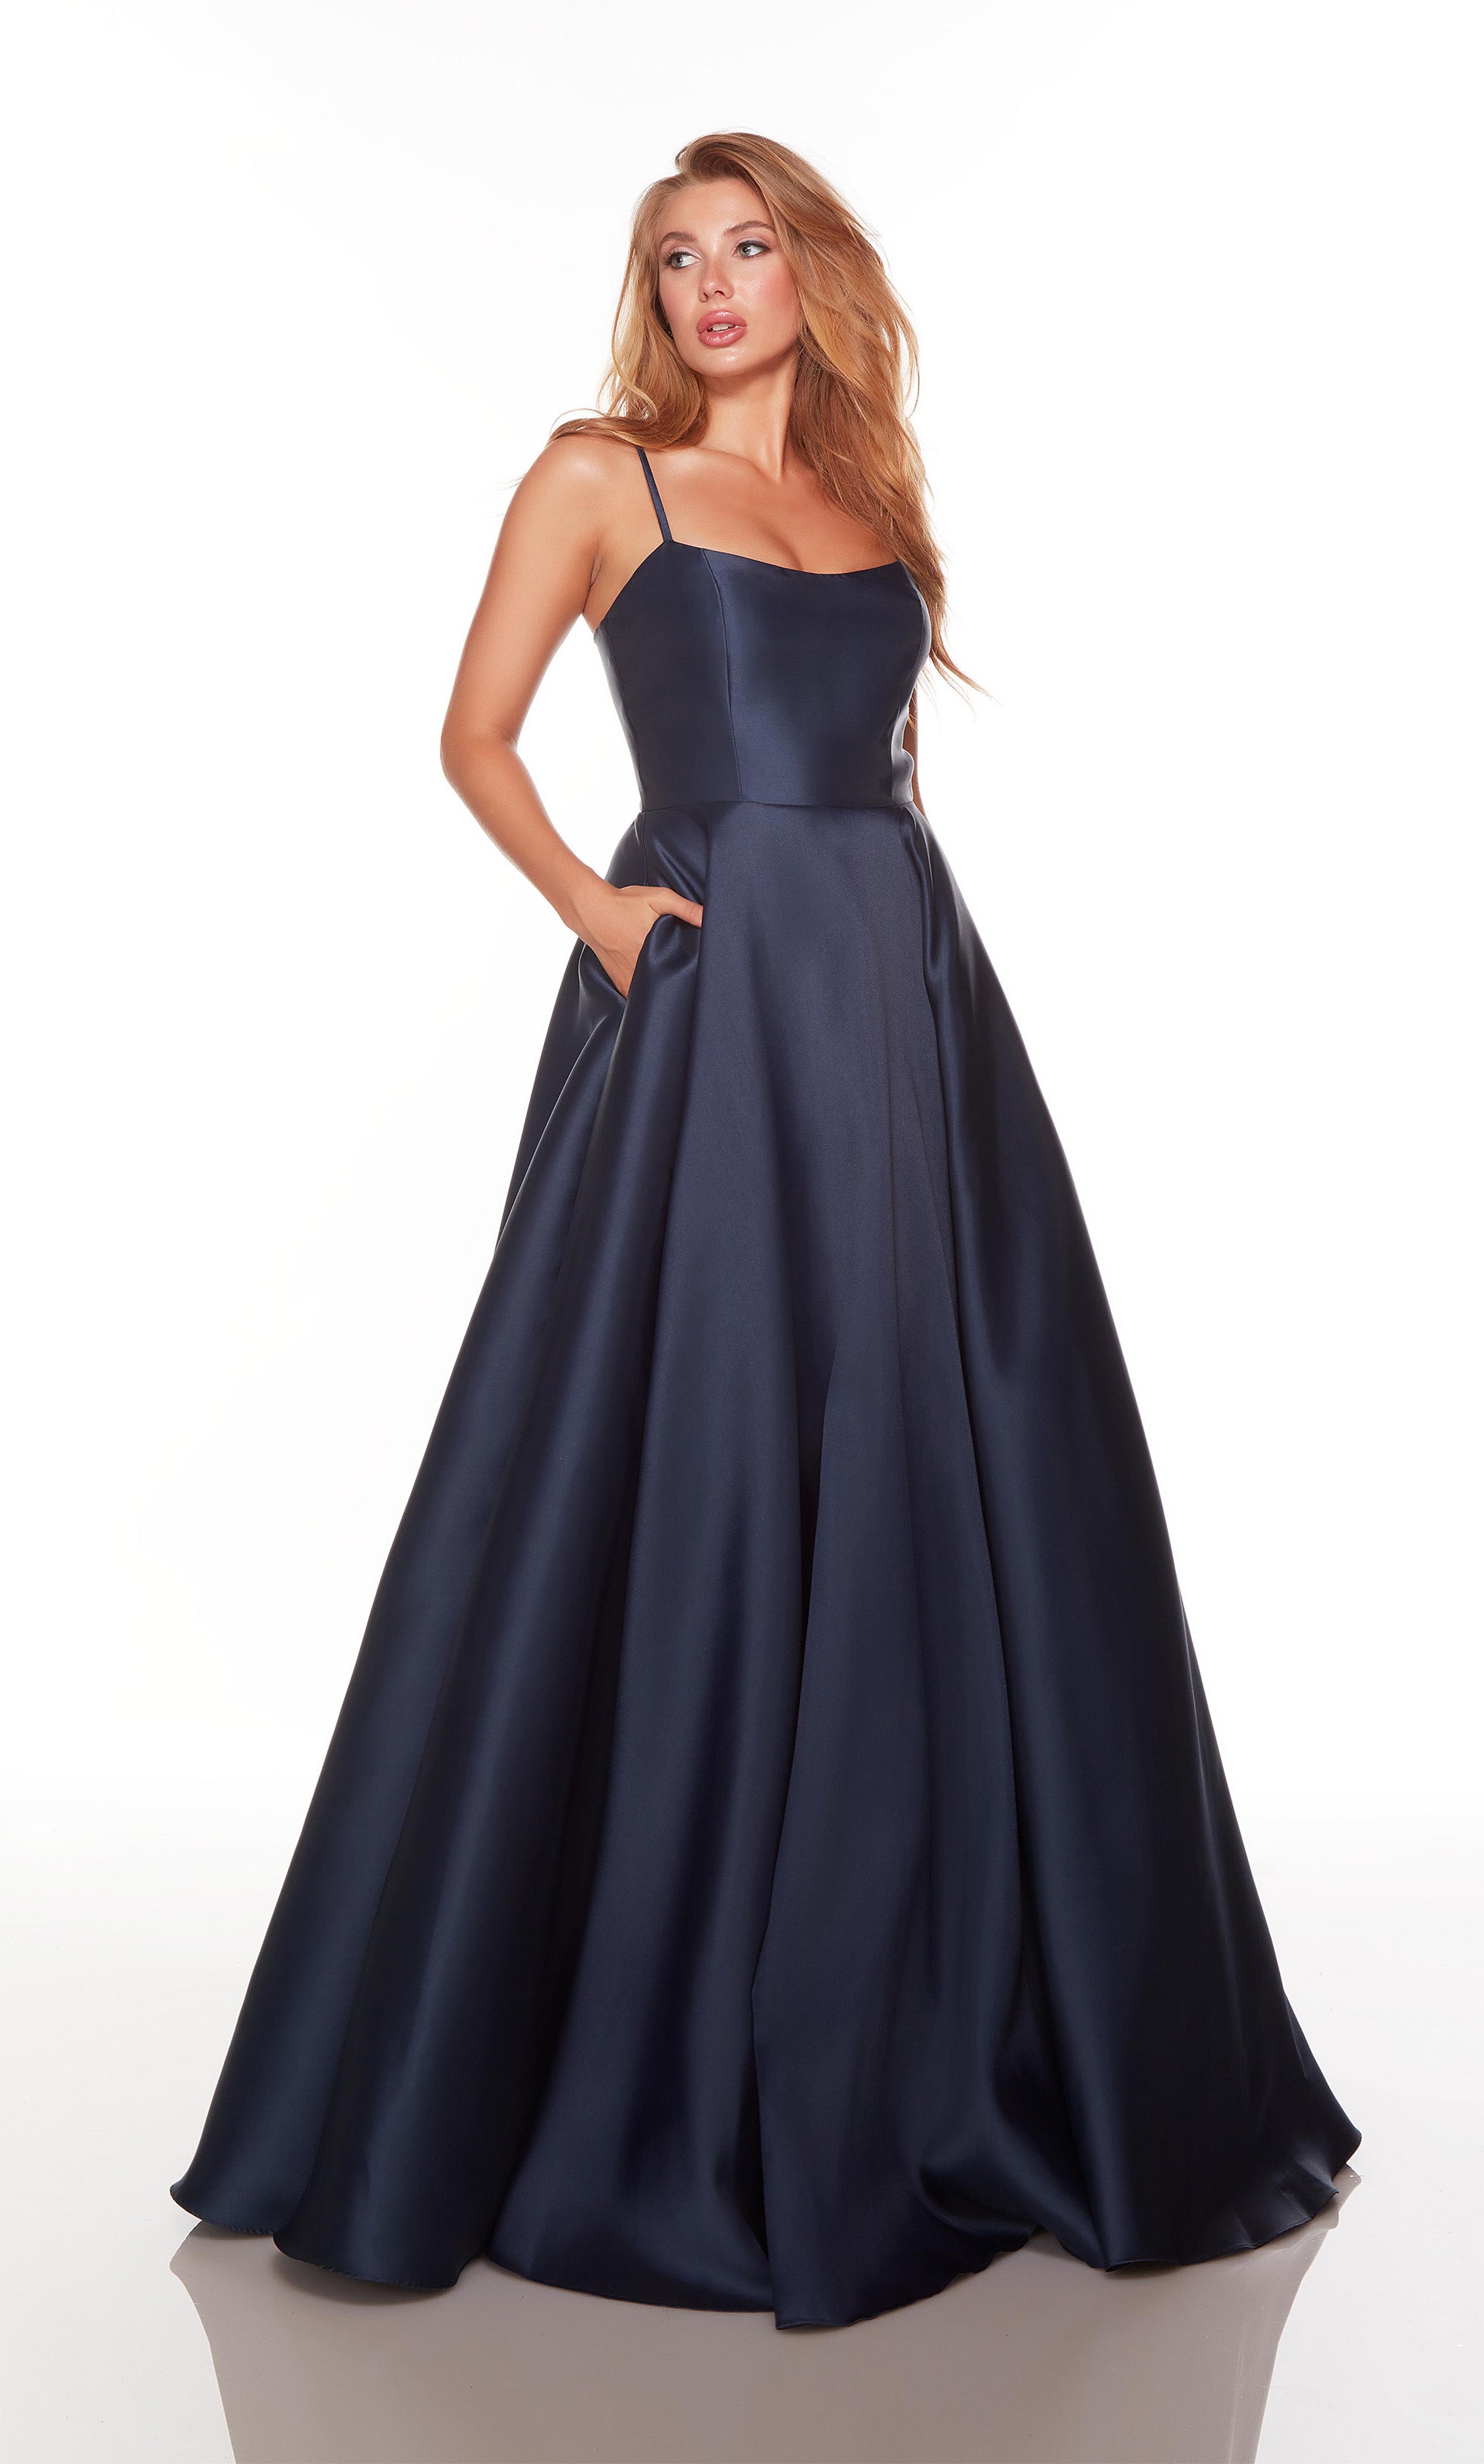 Sherri Hill Short Dress For Prom, Snowball, Winter Formal, Homecoming,  Pageants | eBay